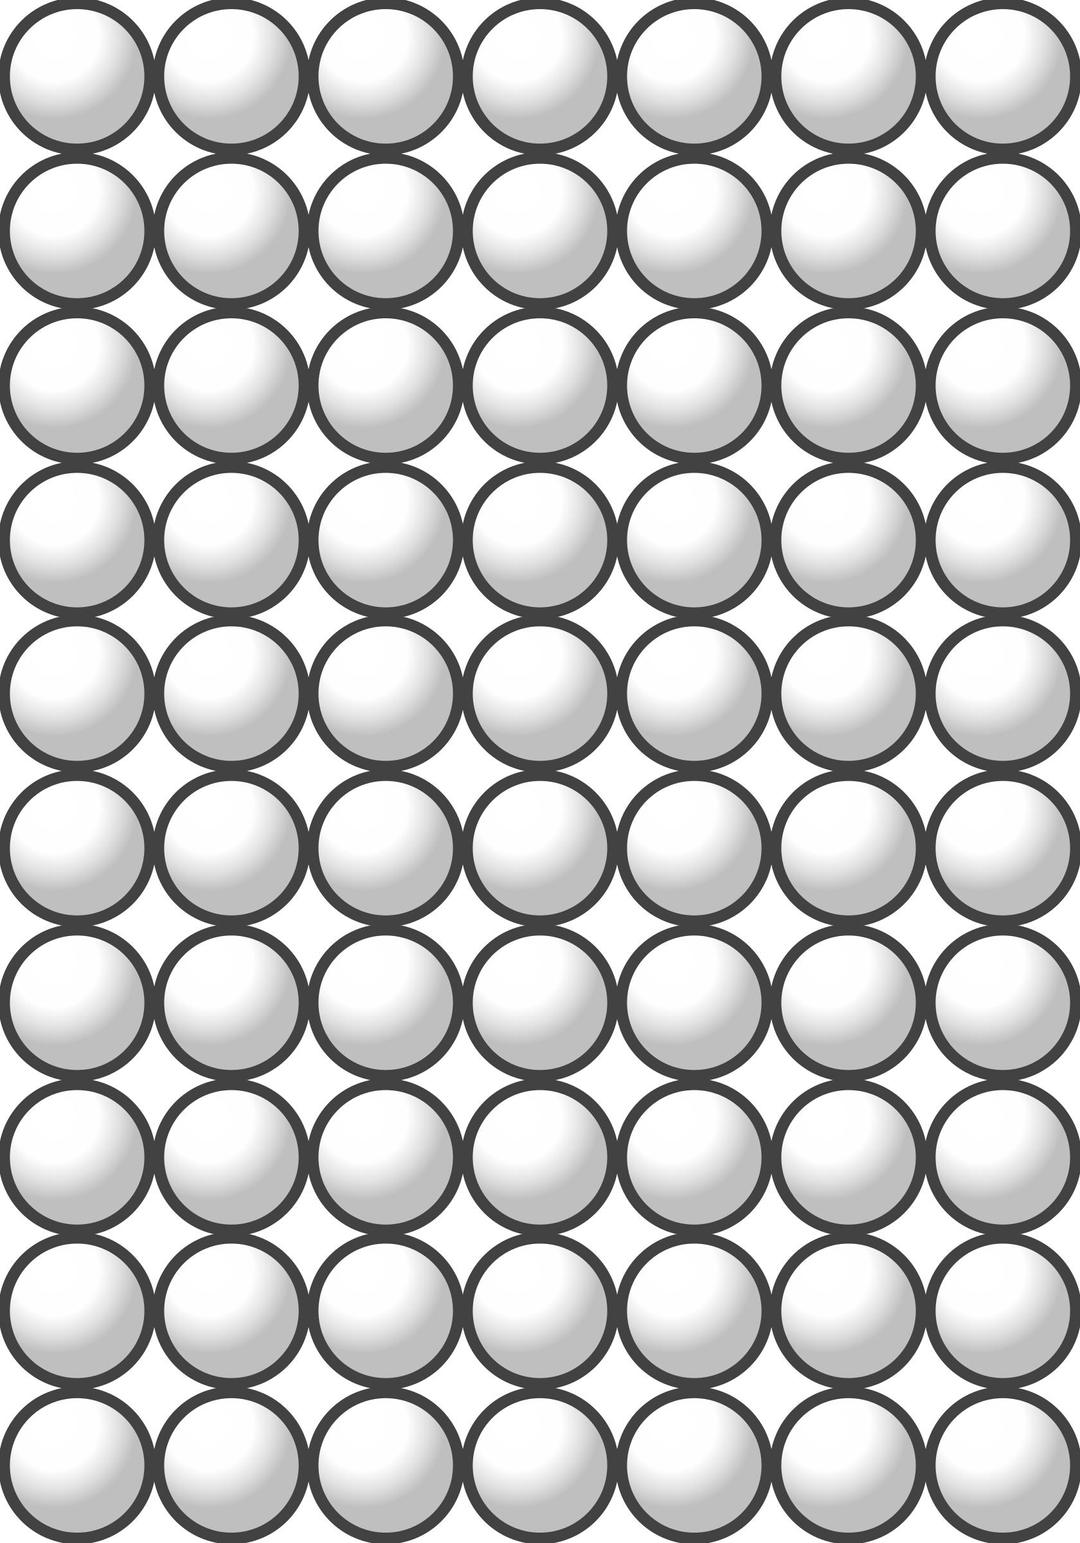 Beads quantitative picture for multiplication 10x7 png transparent